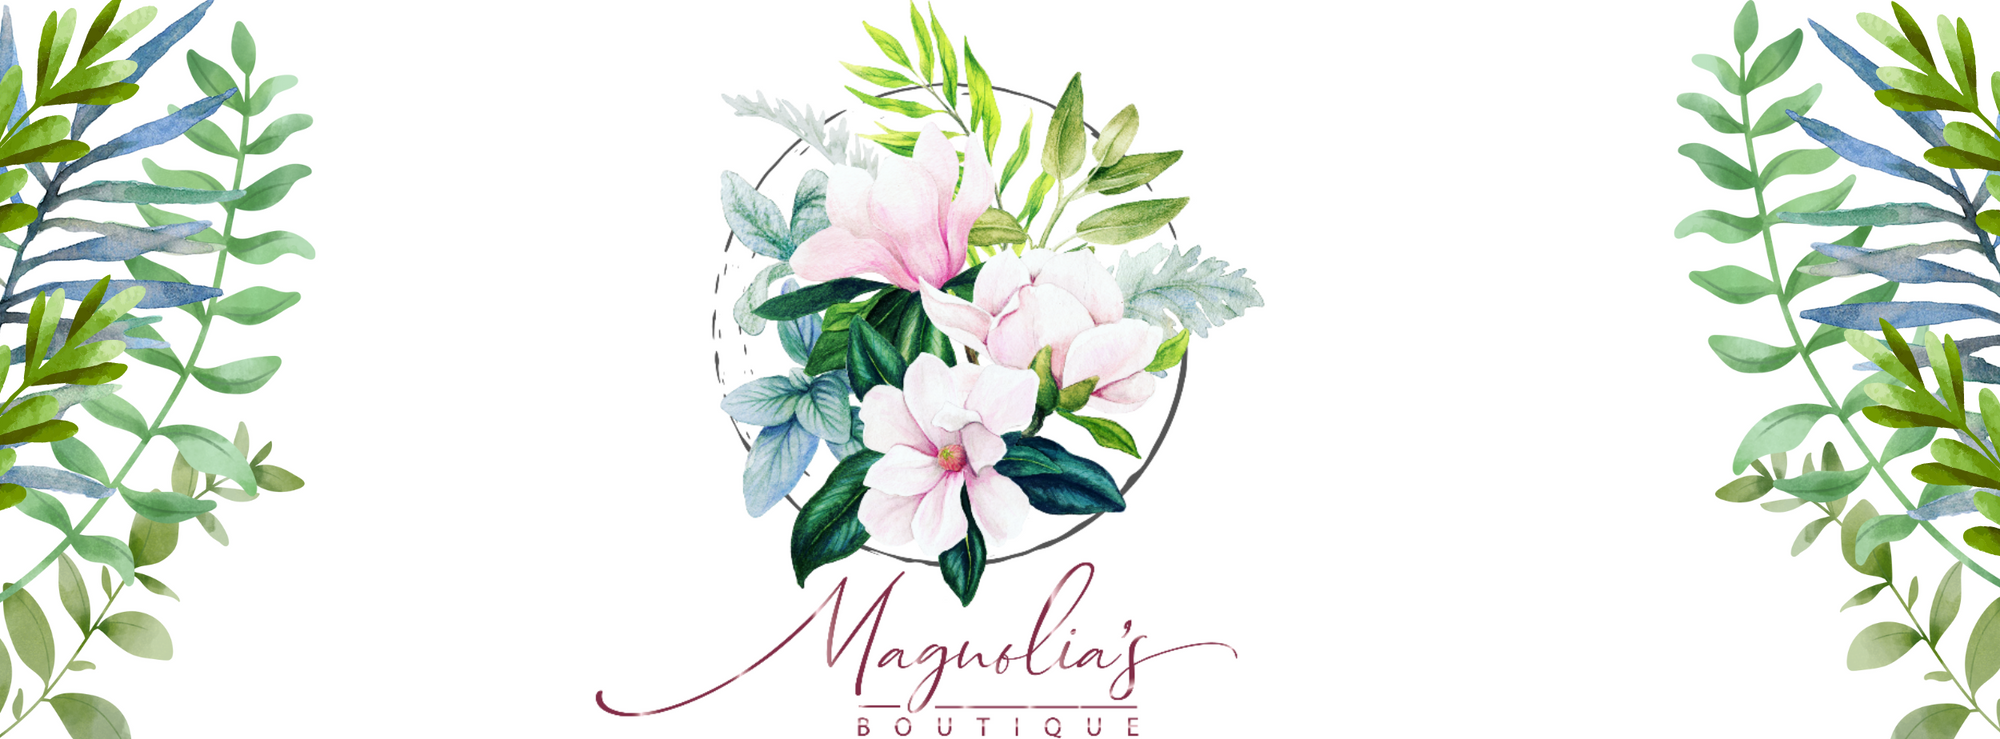 LV/Gucci Earrings – Pink Magnolia Boutique LLC